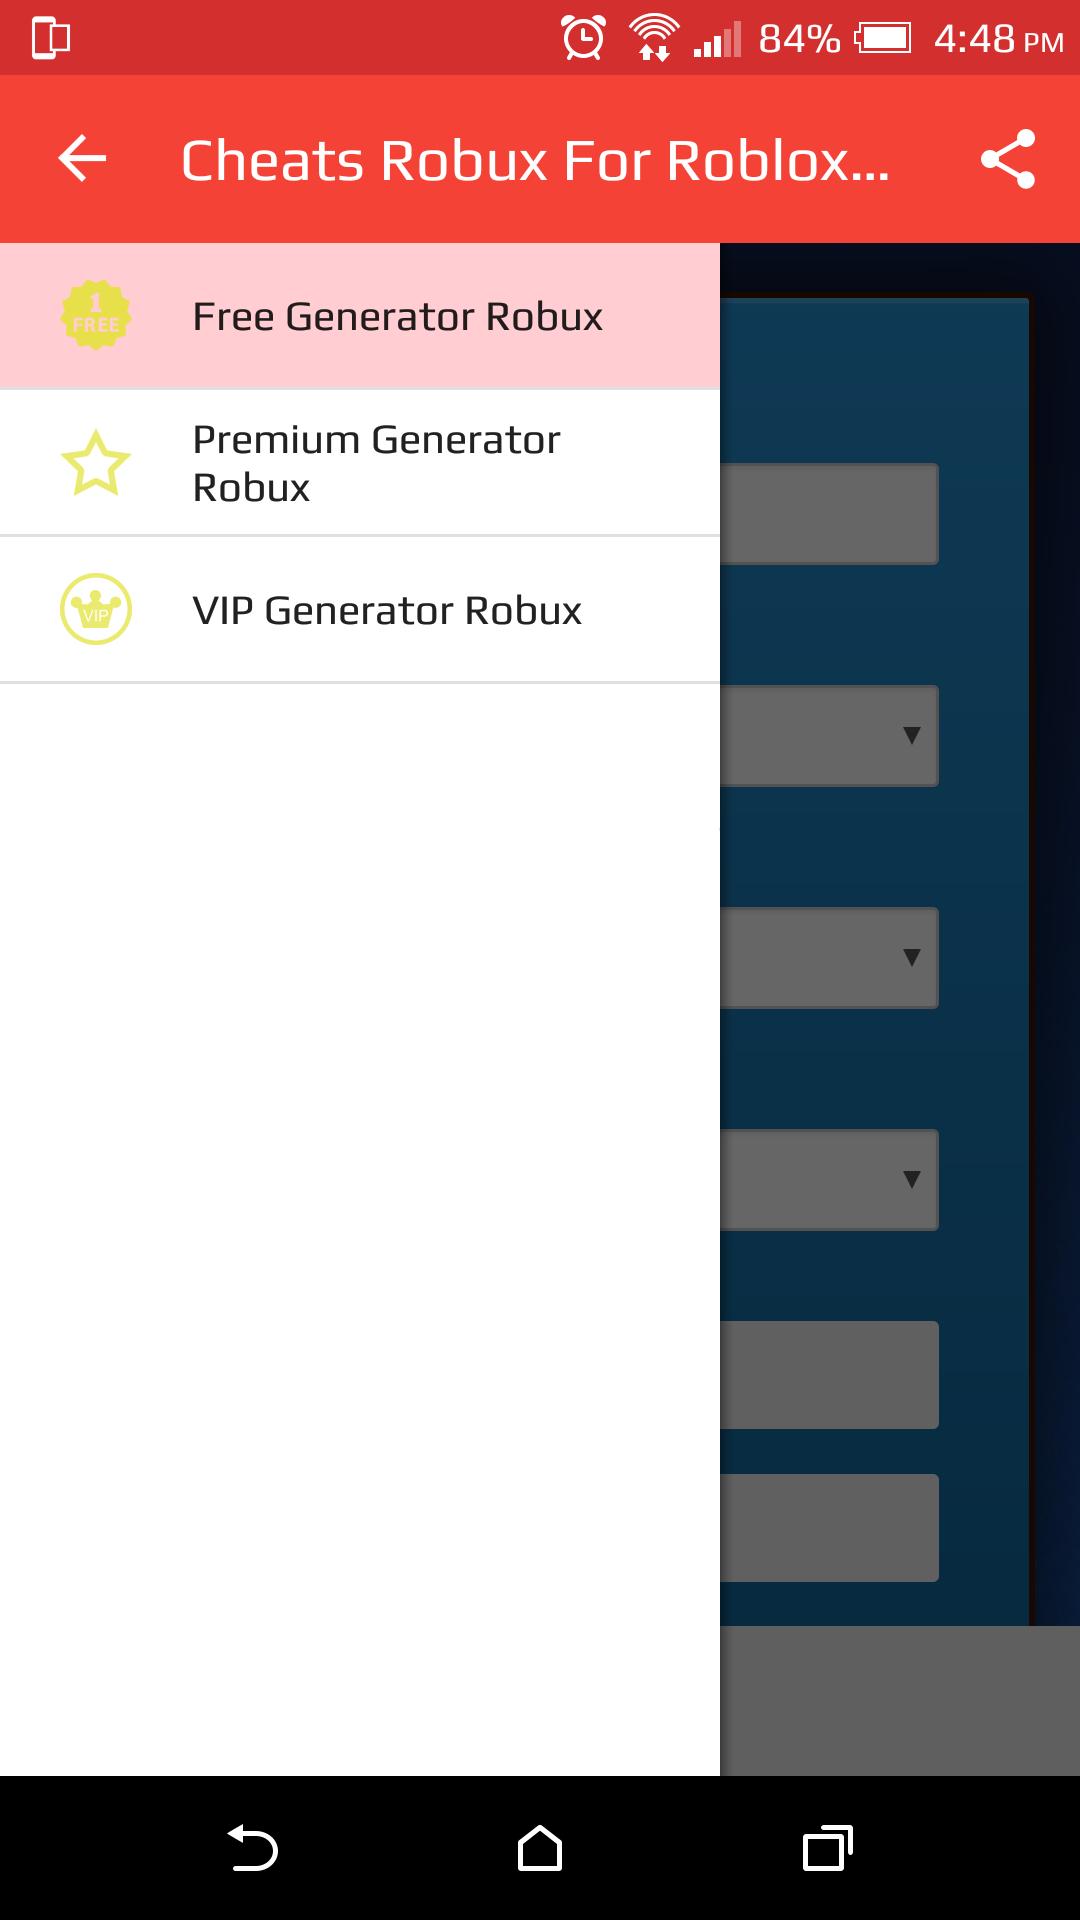 Cheats Robux For Roblox Prank Para Android Apk Baixar - cheat para robux